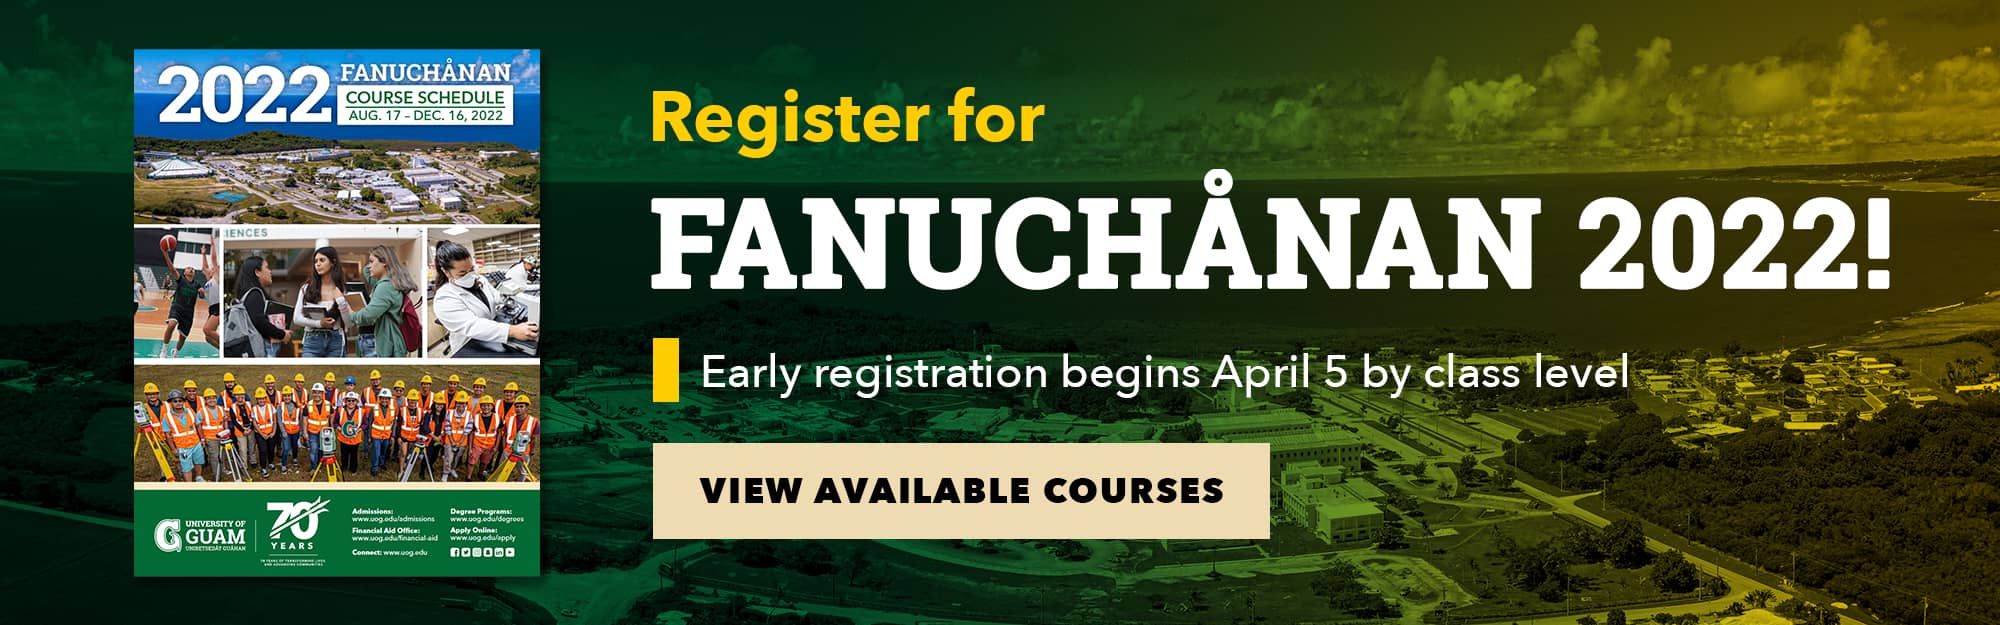 Register for Fanchånan 2022! Early registration begins April 5 by class level.